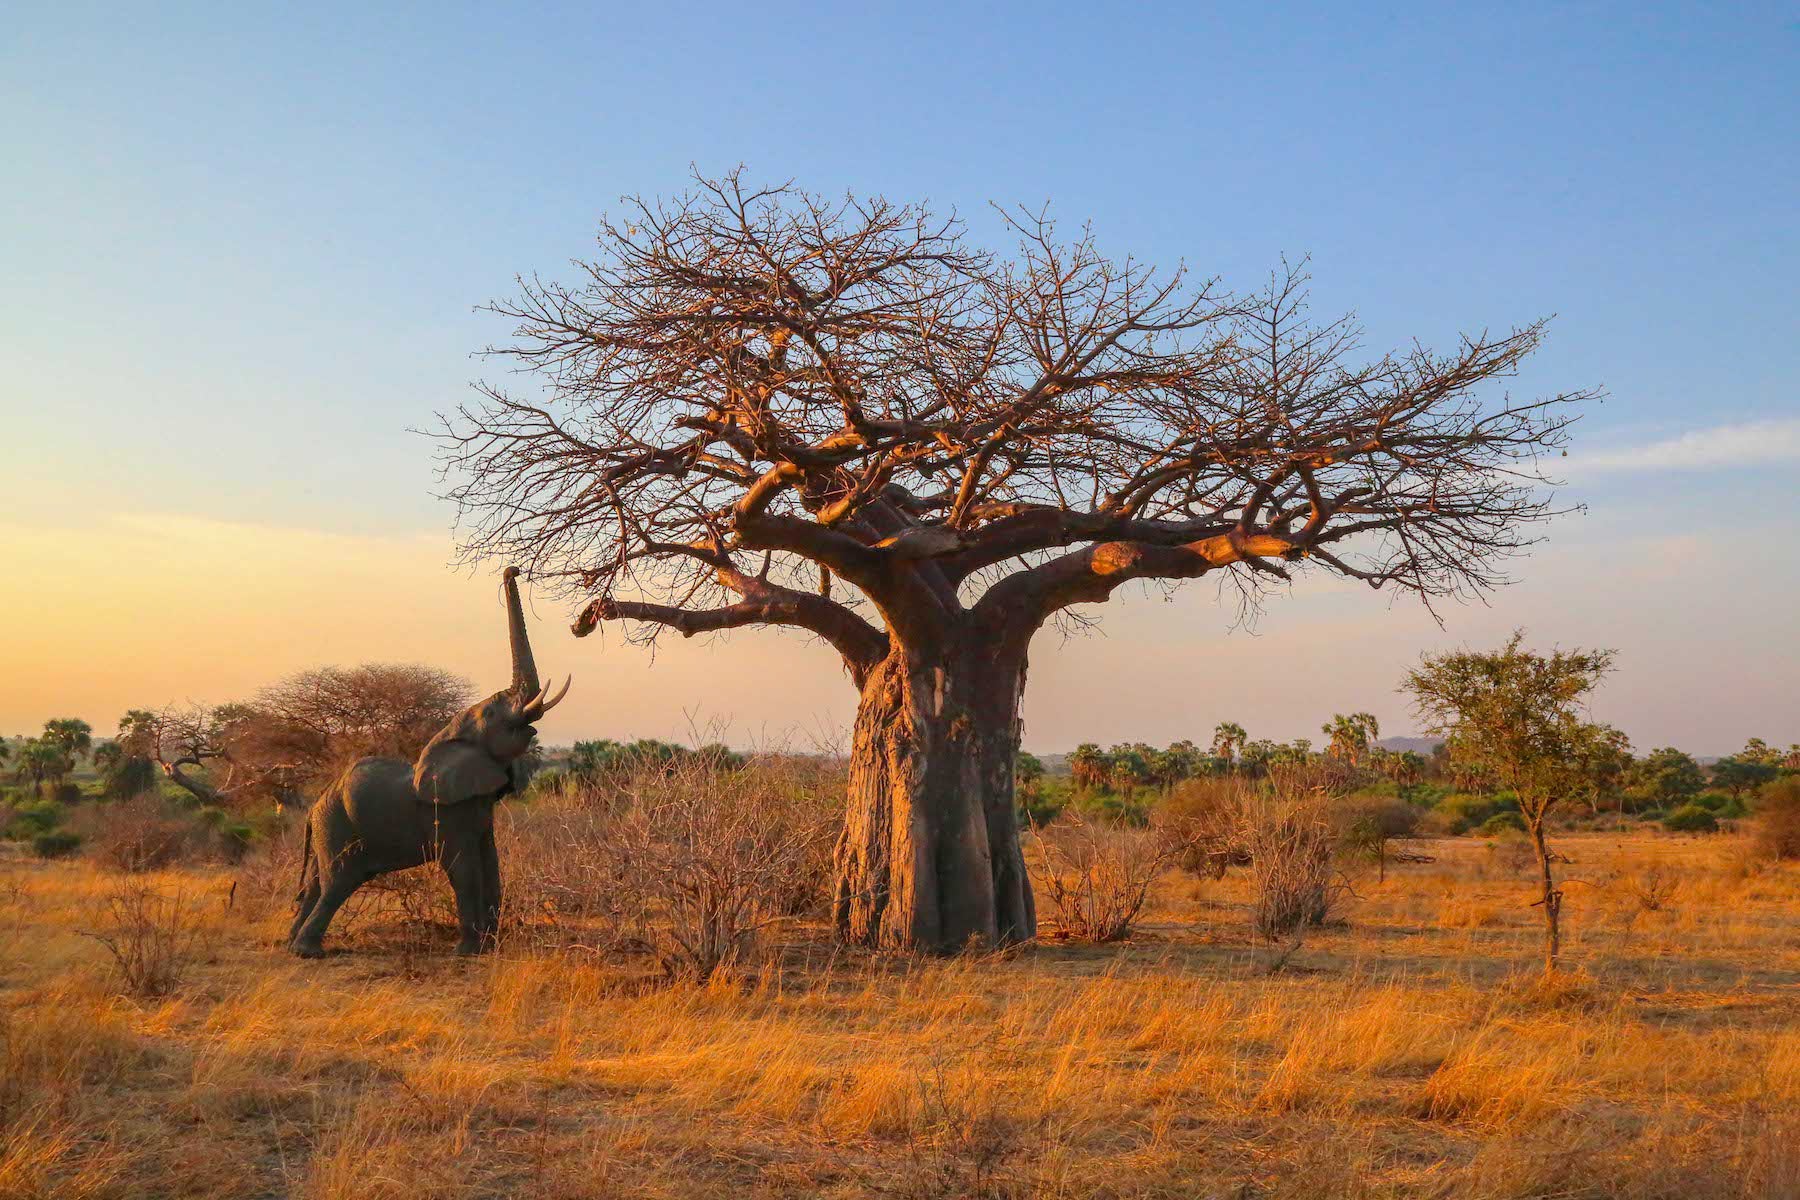 Elephant reaching for high branches, Ruaha National Park, Tanzania